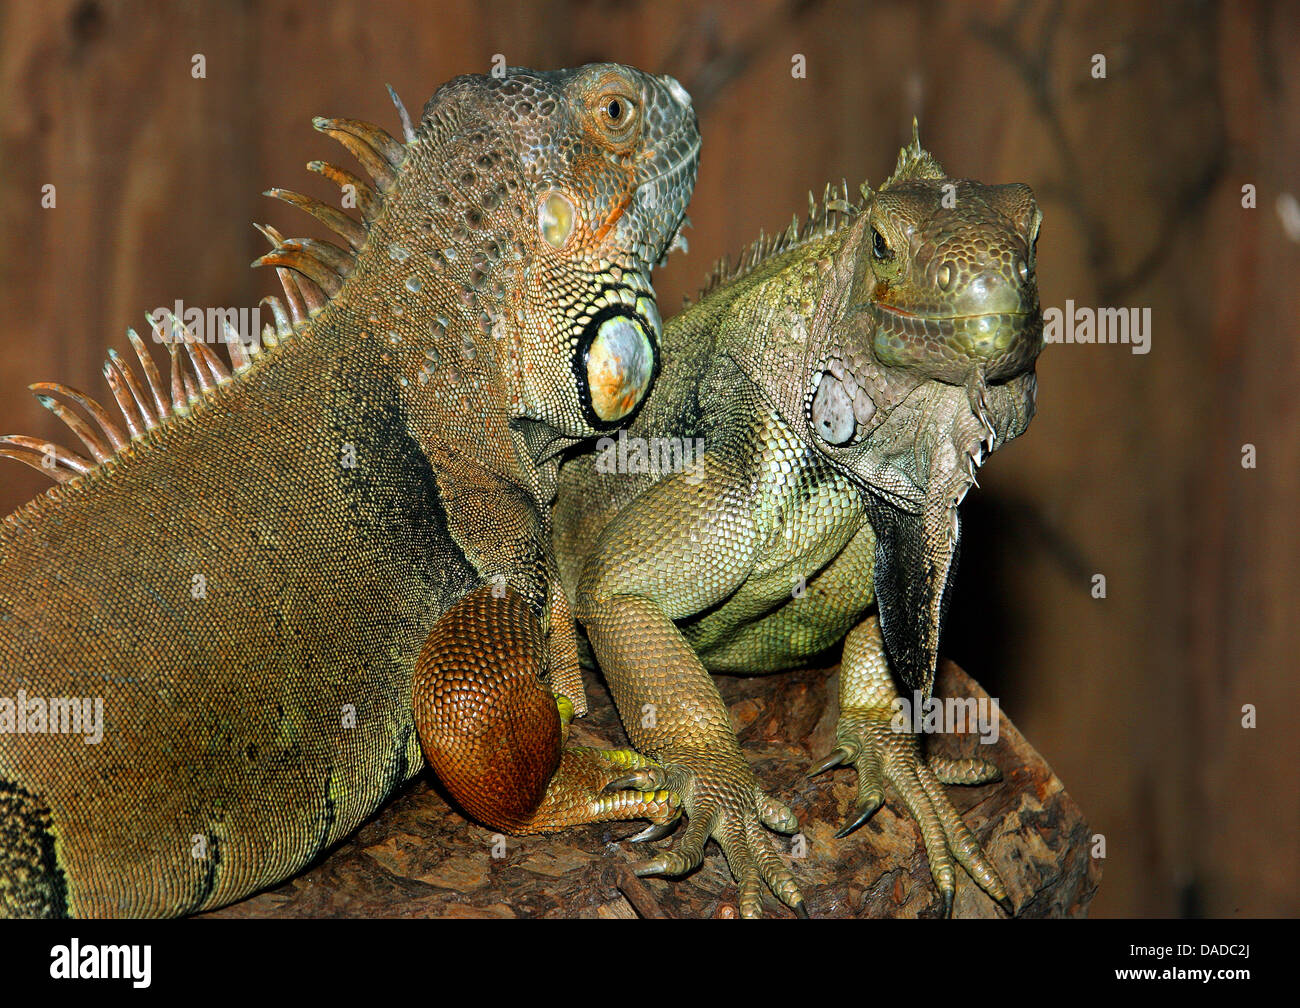 Iguane vert, Iguana iguana iguana (commune), l'iguane vert sur une branche Banque D'Images